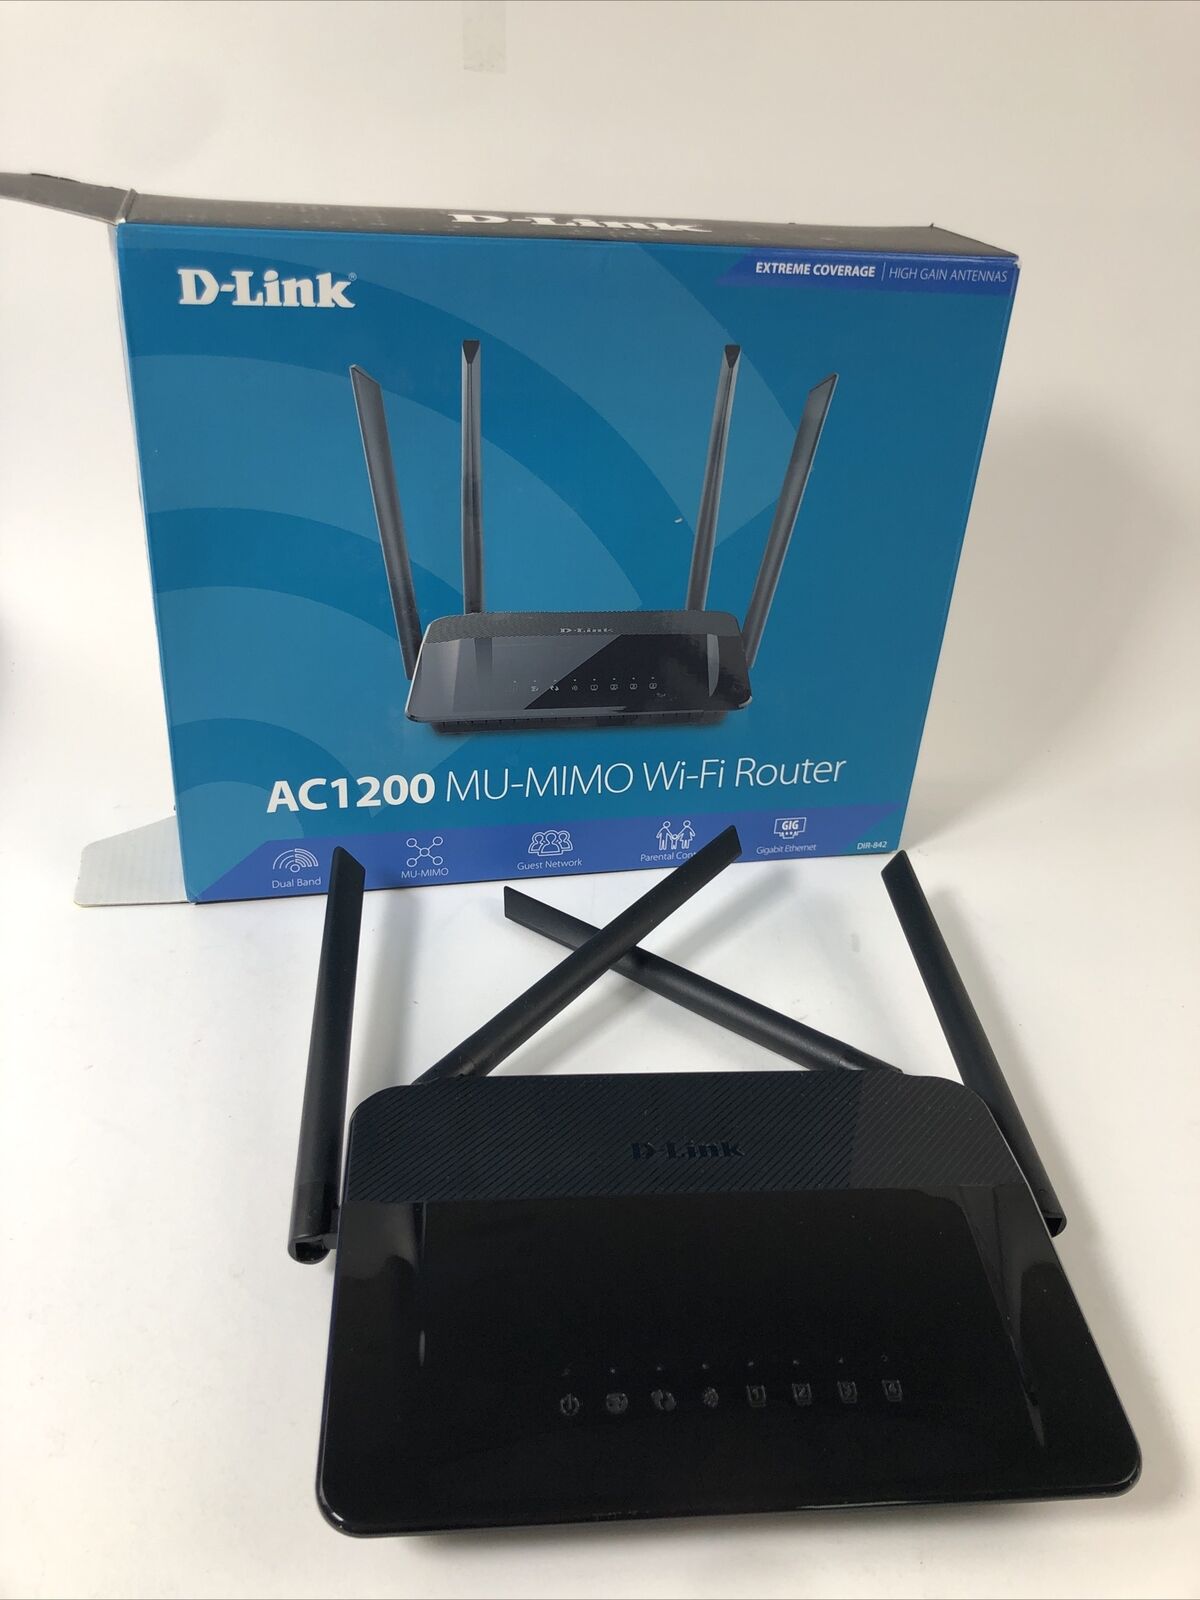 D-Link DIR-842 Wi-Fi Router